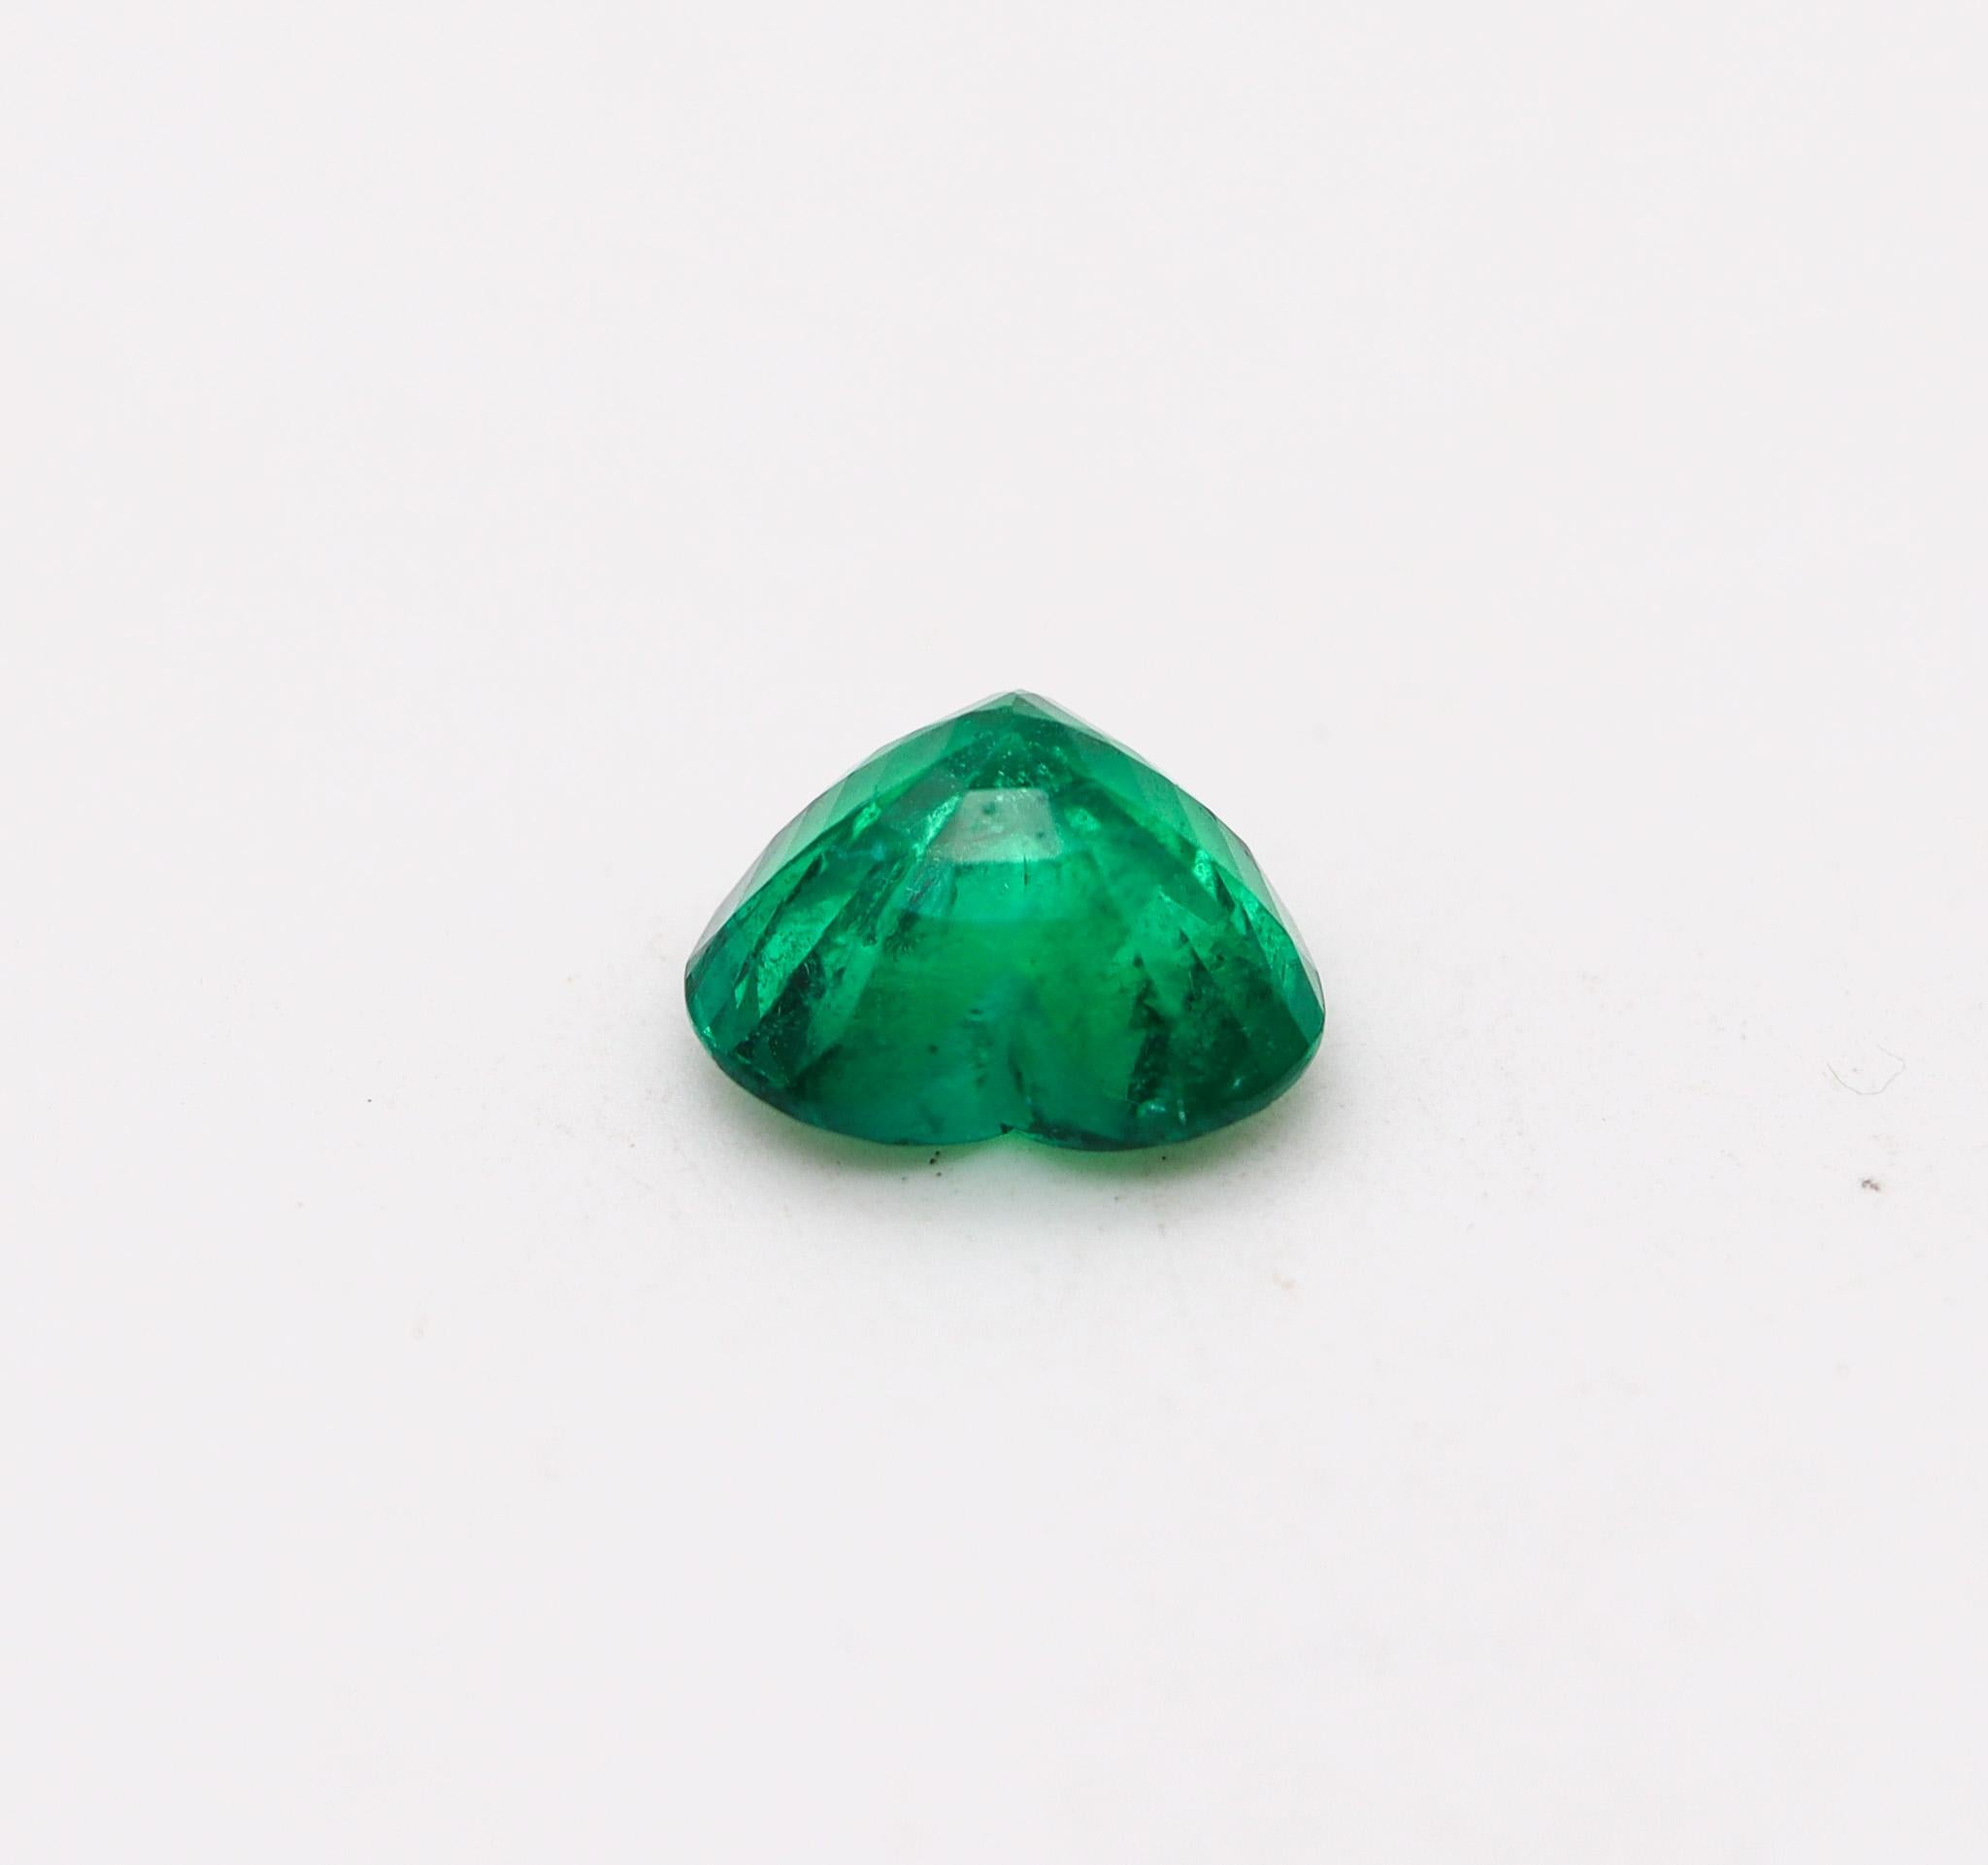 Heart Cut Gia Certified Emerald 5.07 Carats Heart Shaped Cut Great Vivid Green For Sale